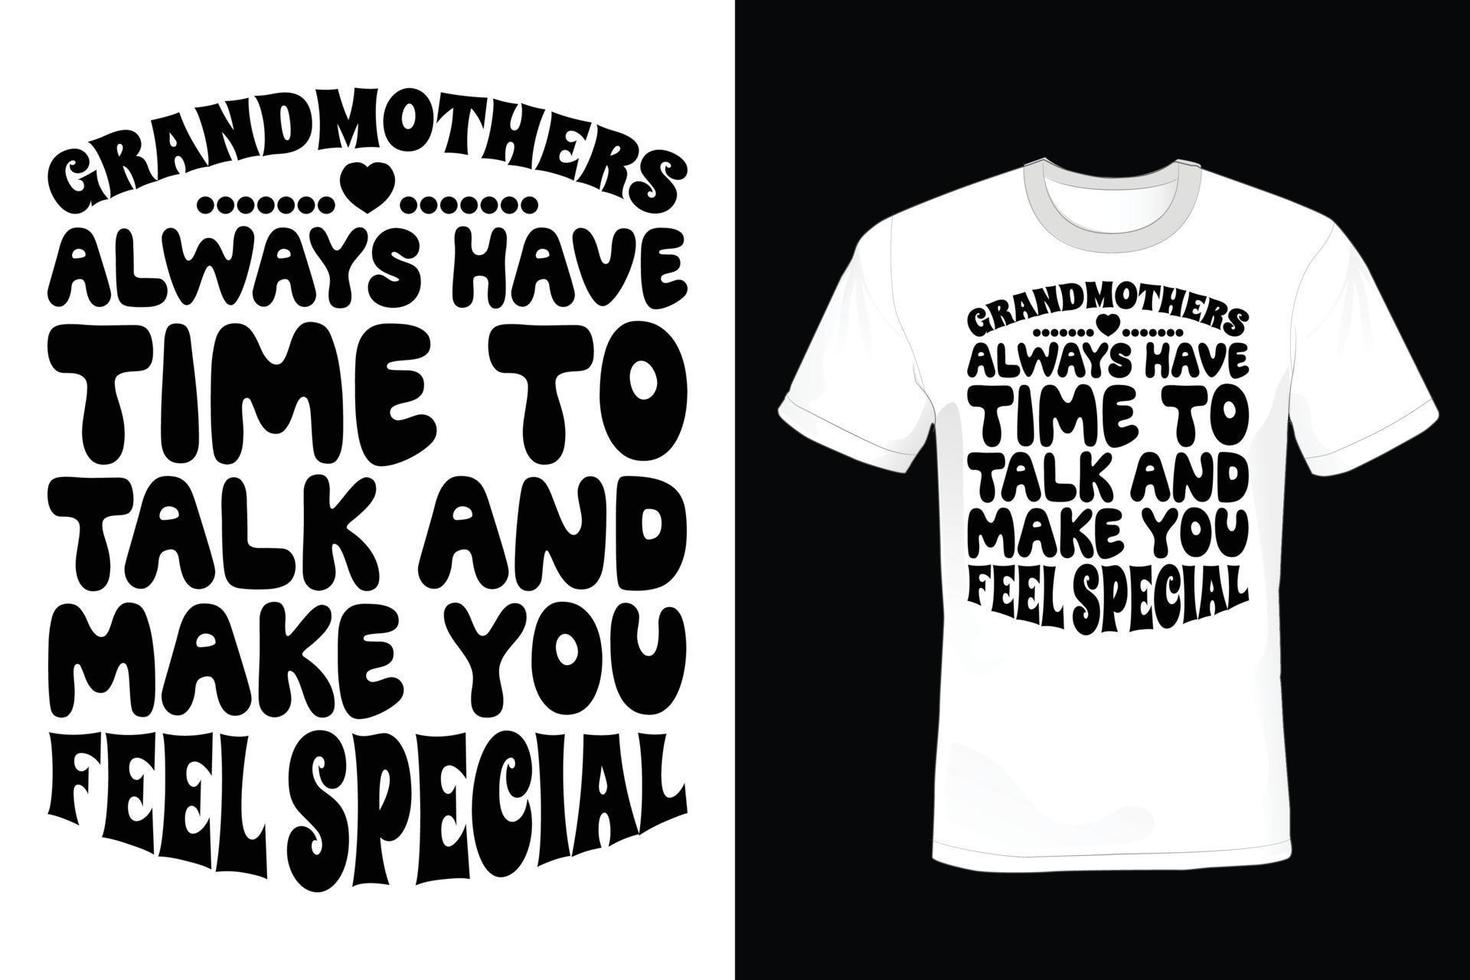 Grandma T shirt design, vintage, typography vector